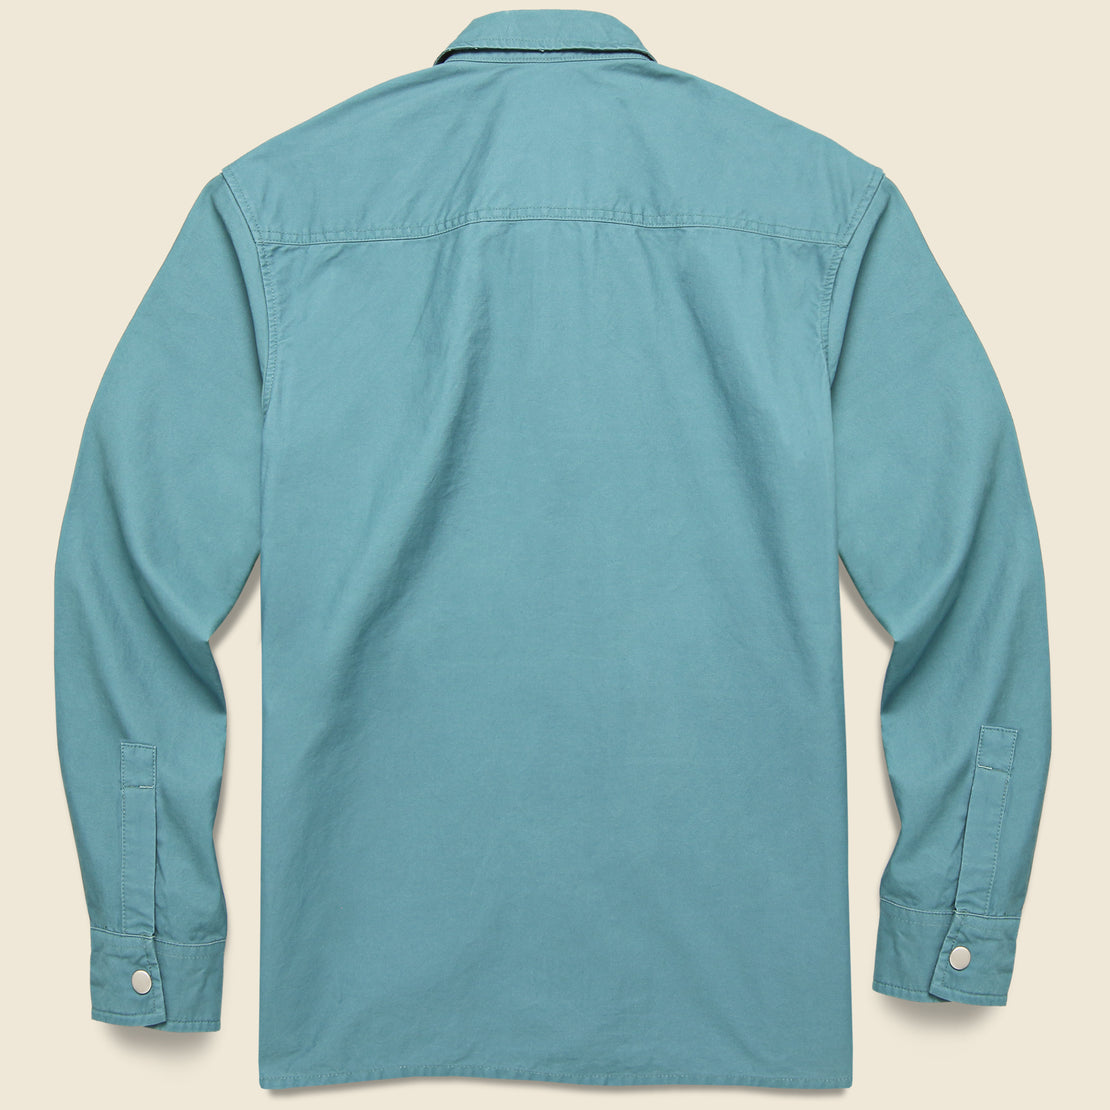 Lander Shirt Jacket - Hydro - Carhartt WIP - STAG Provisions - Outerwear - Shirt Jacket